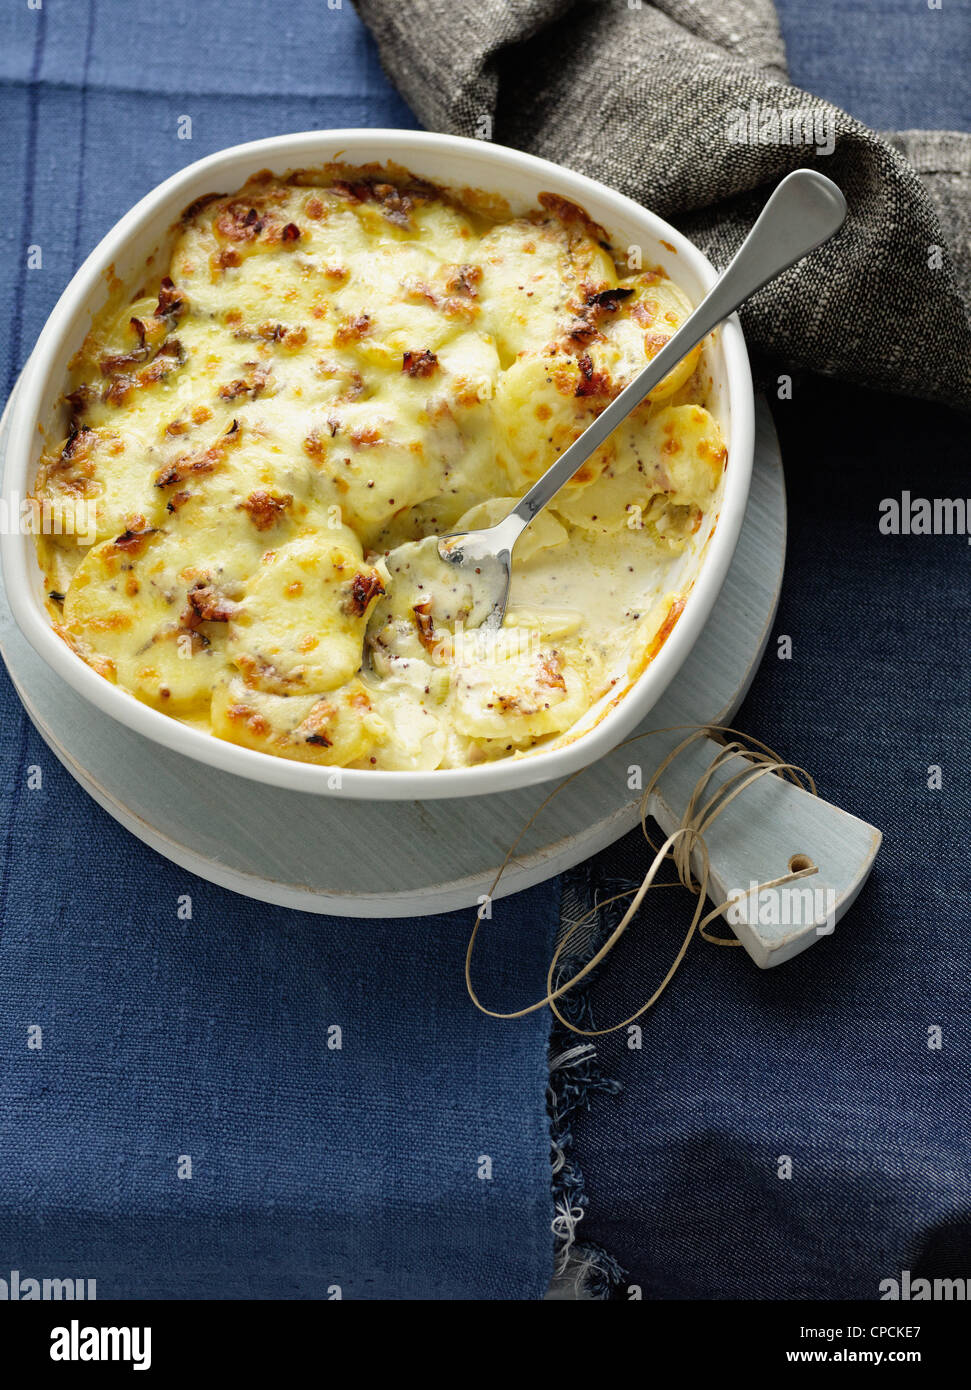 Sliced potato casserole with cheese Stock Photo